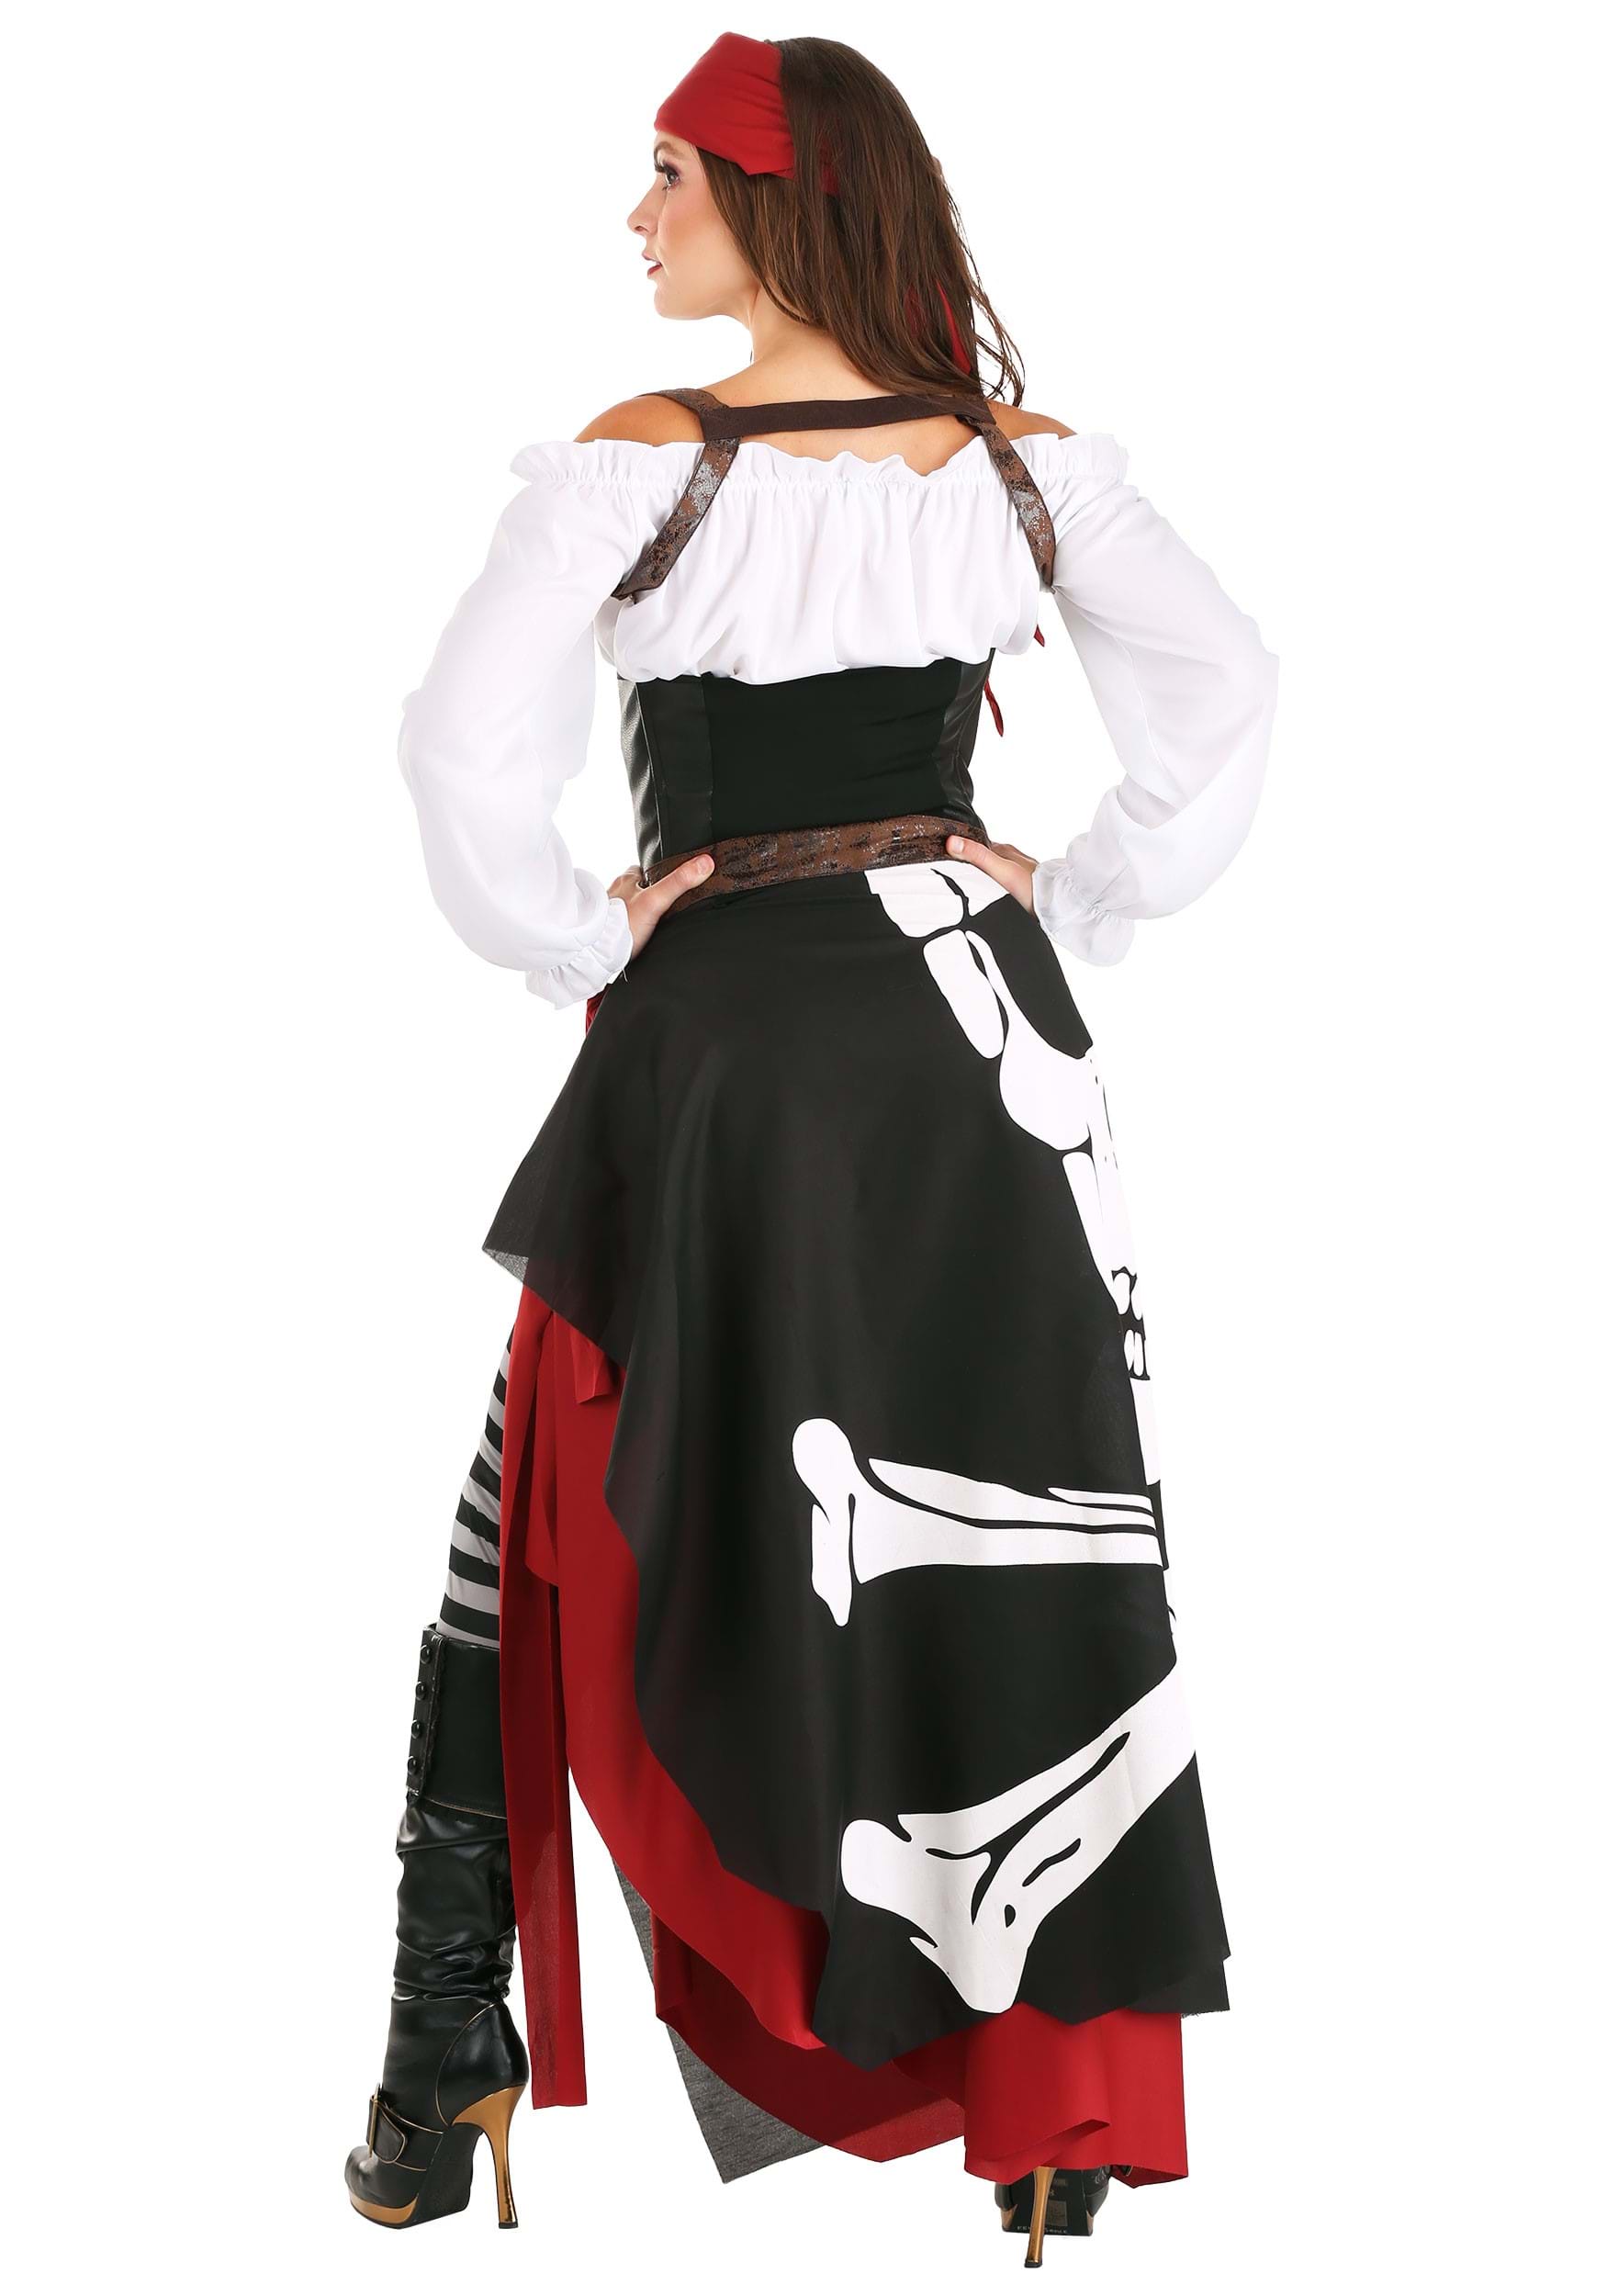 Women's Skeleton Flag Rogue Pirate Costume